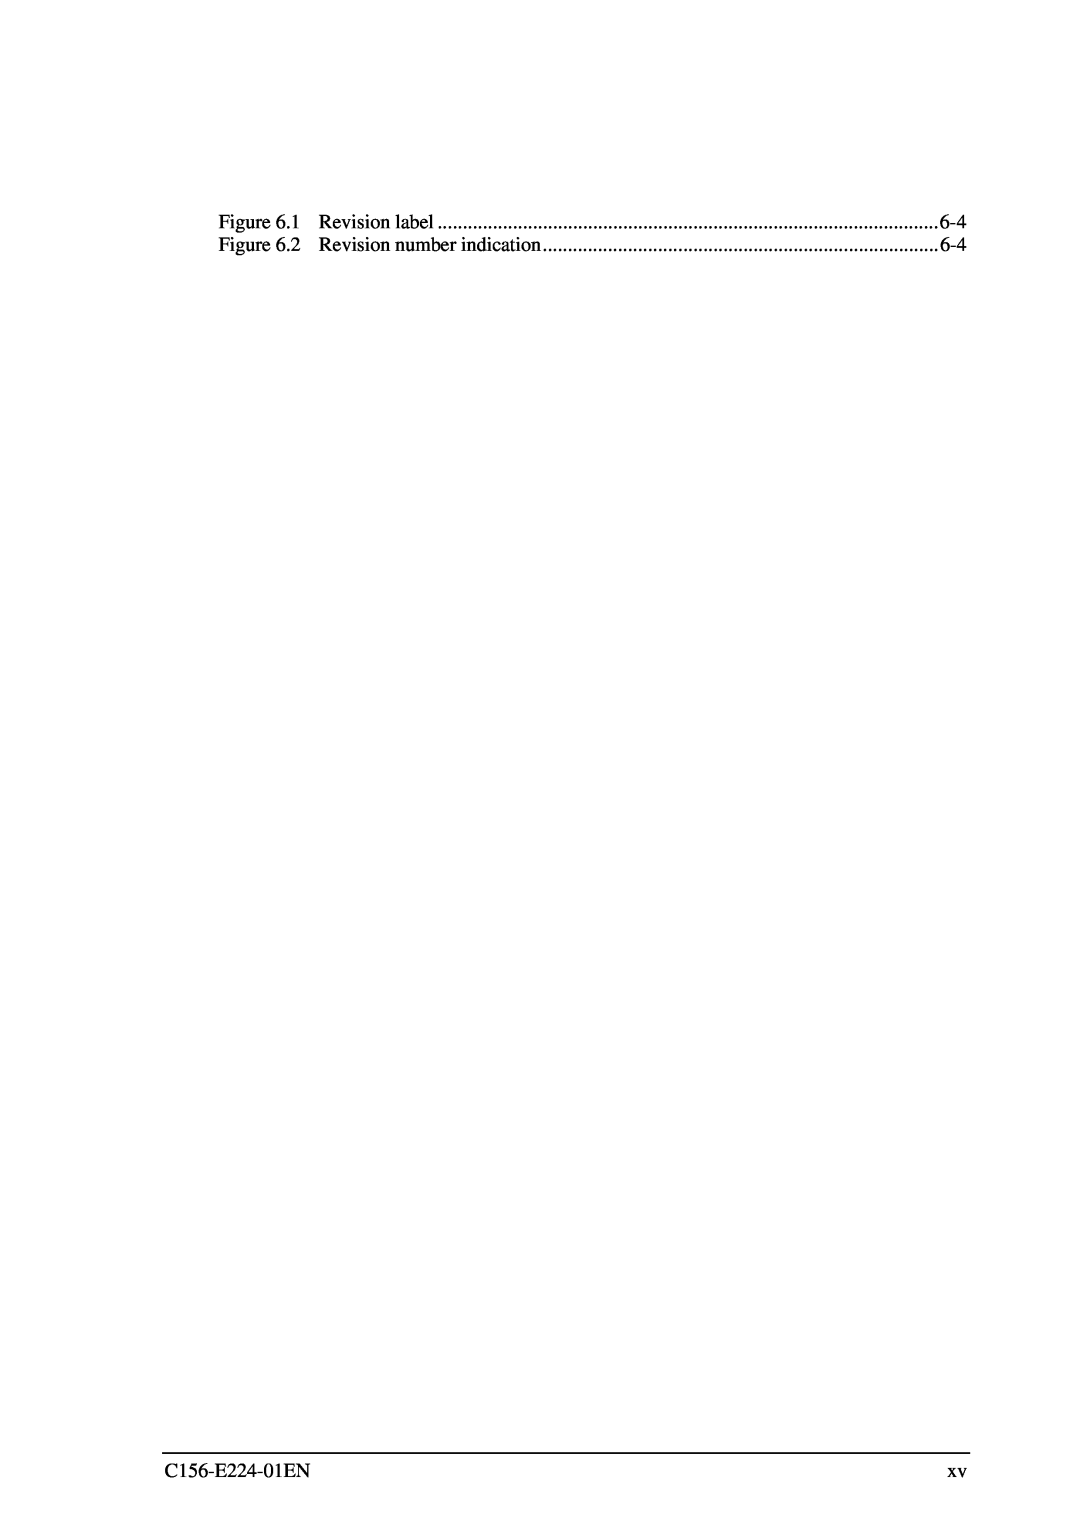 Fujitsu MCJ3230SS manual C156-E224-01EN, Revision label, Revision number indication 